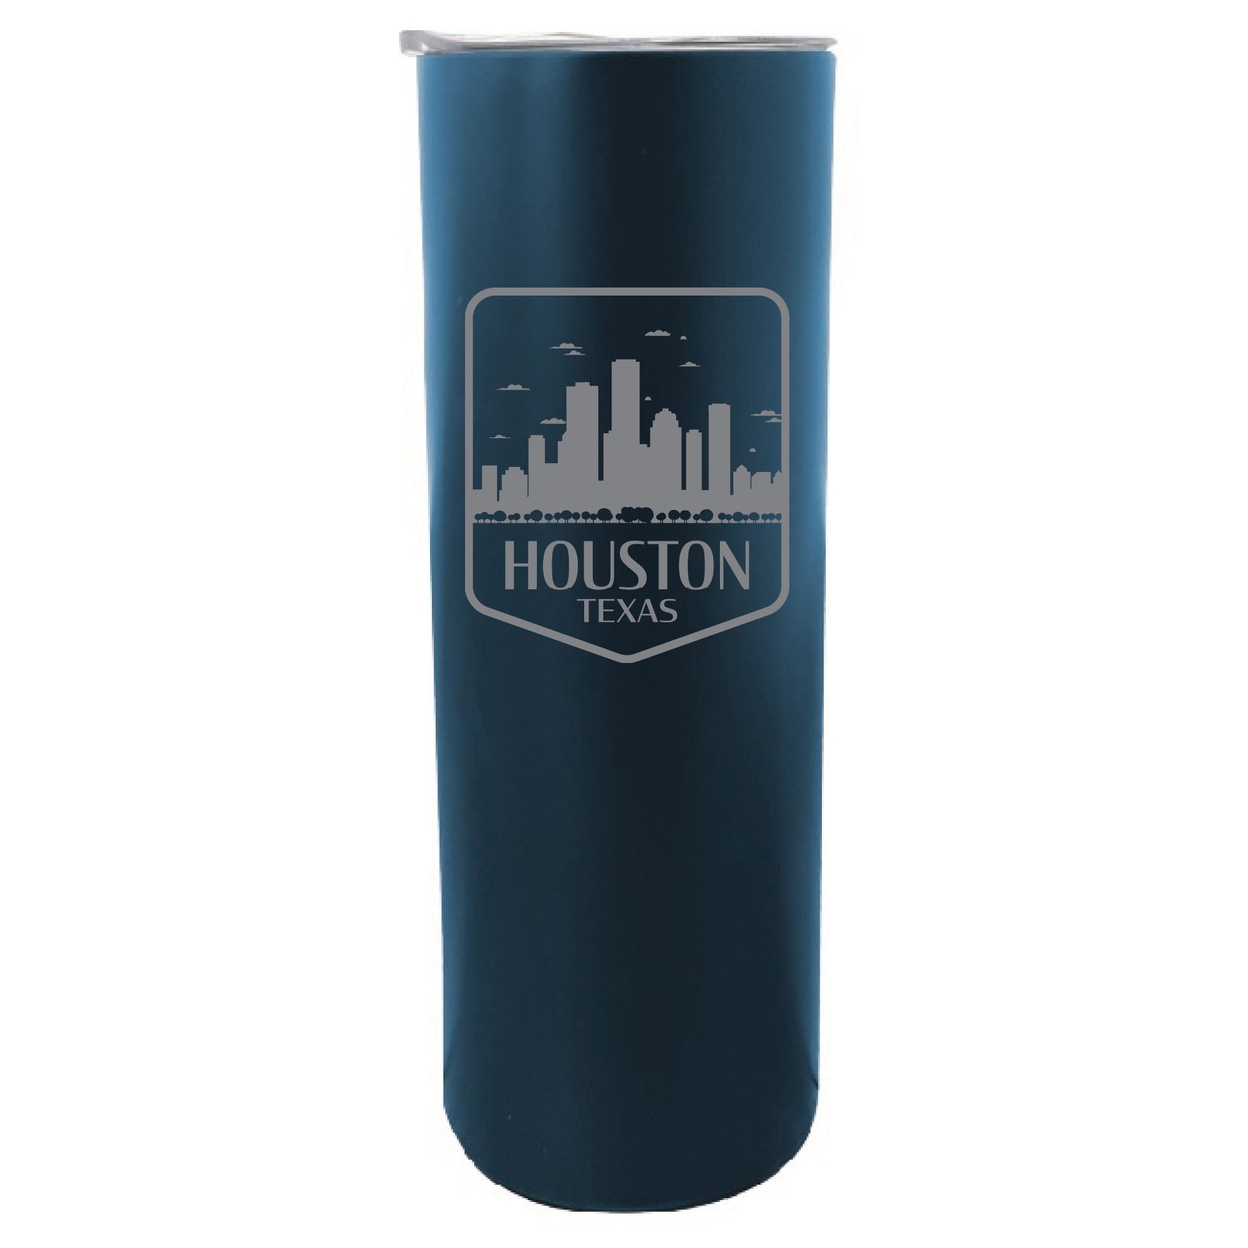 Houston Texas Souvenir 20 Oz Engraved Insulated Stainless Steel Skinny Tumbler - Seafoam,,4-Pack